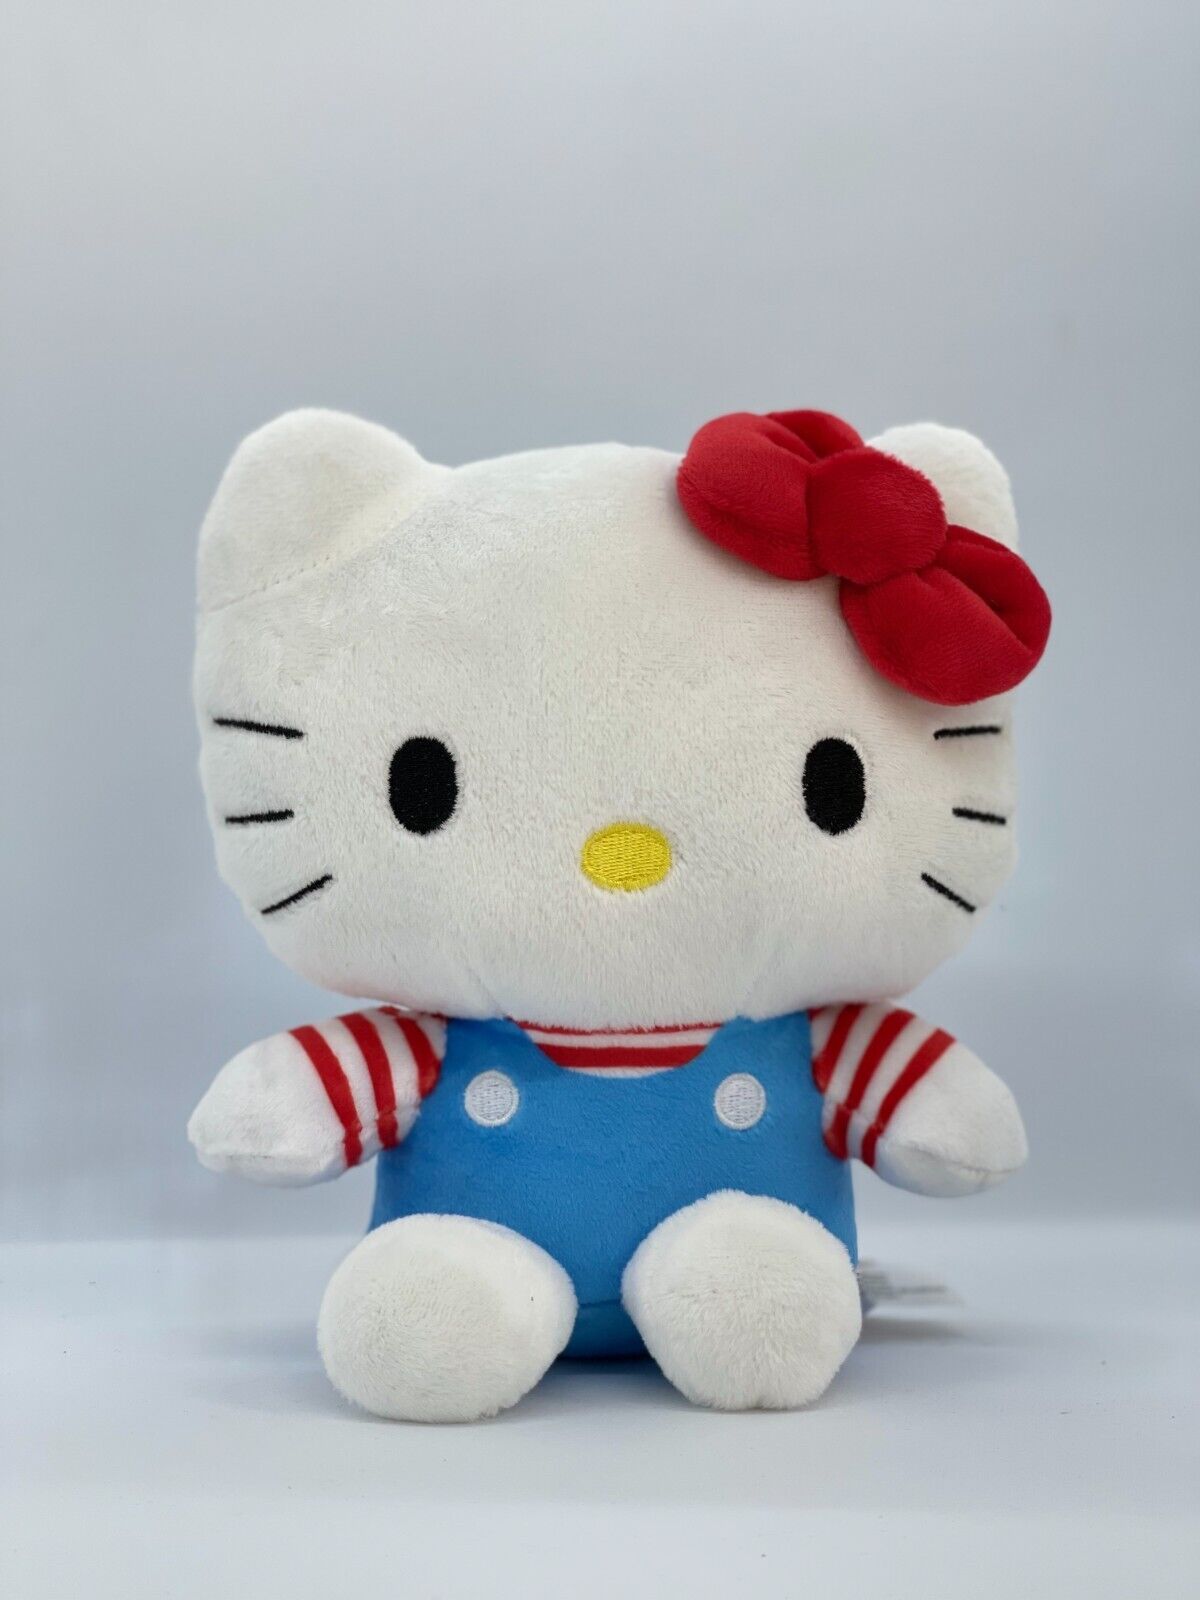 Sanrio Hello Kitty & Friends Melody Keroppi Pompompurin Kuromi Plush Doll